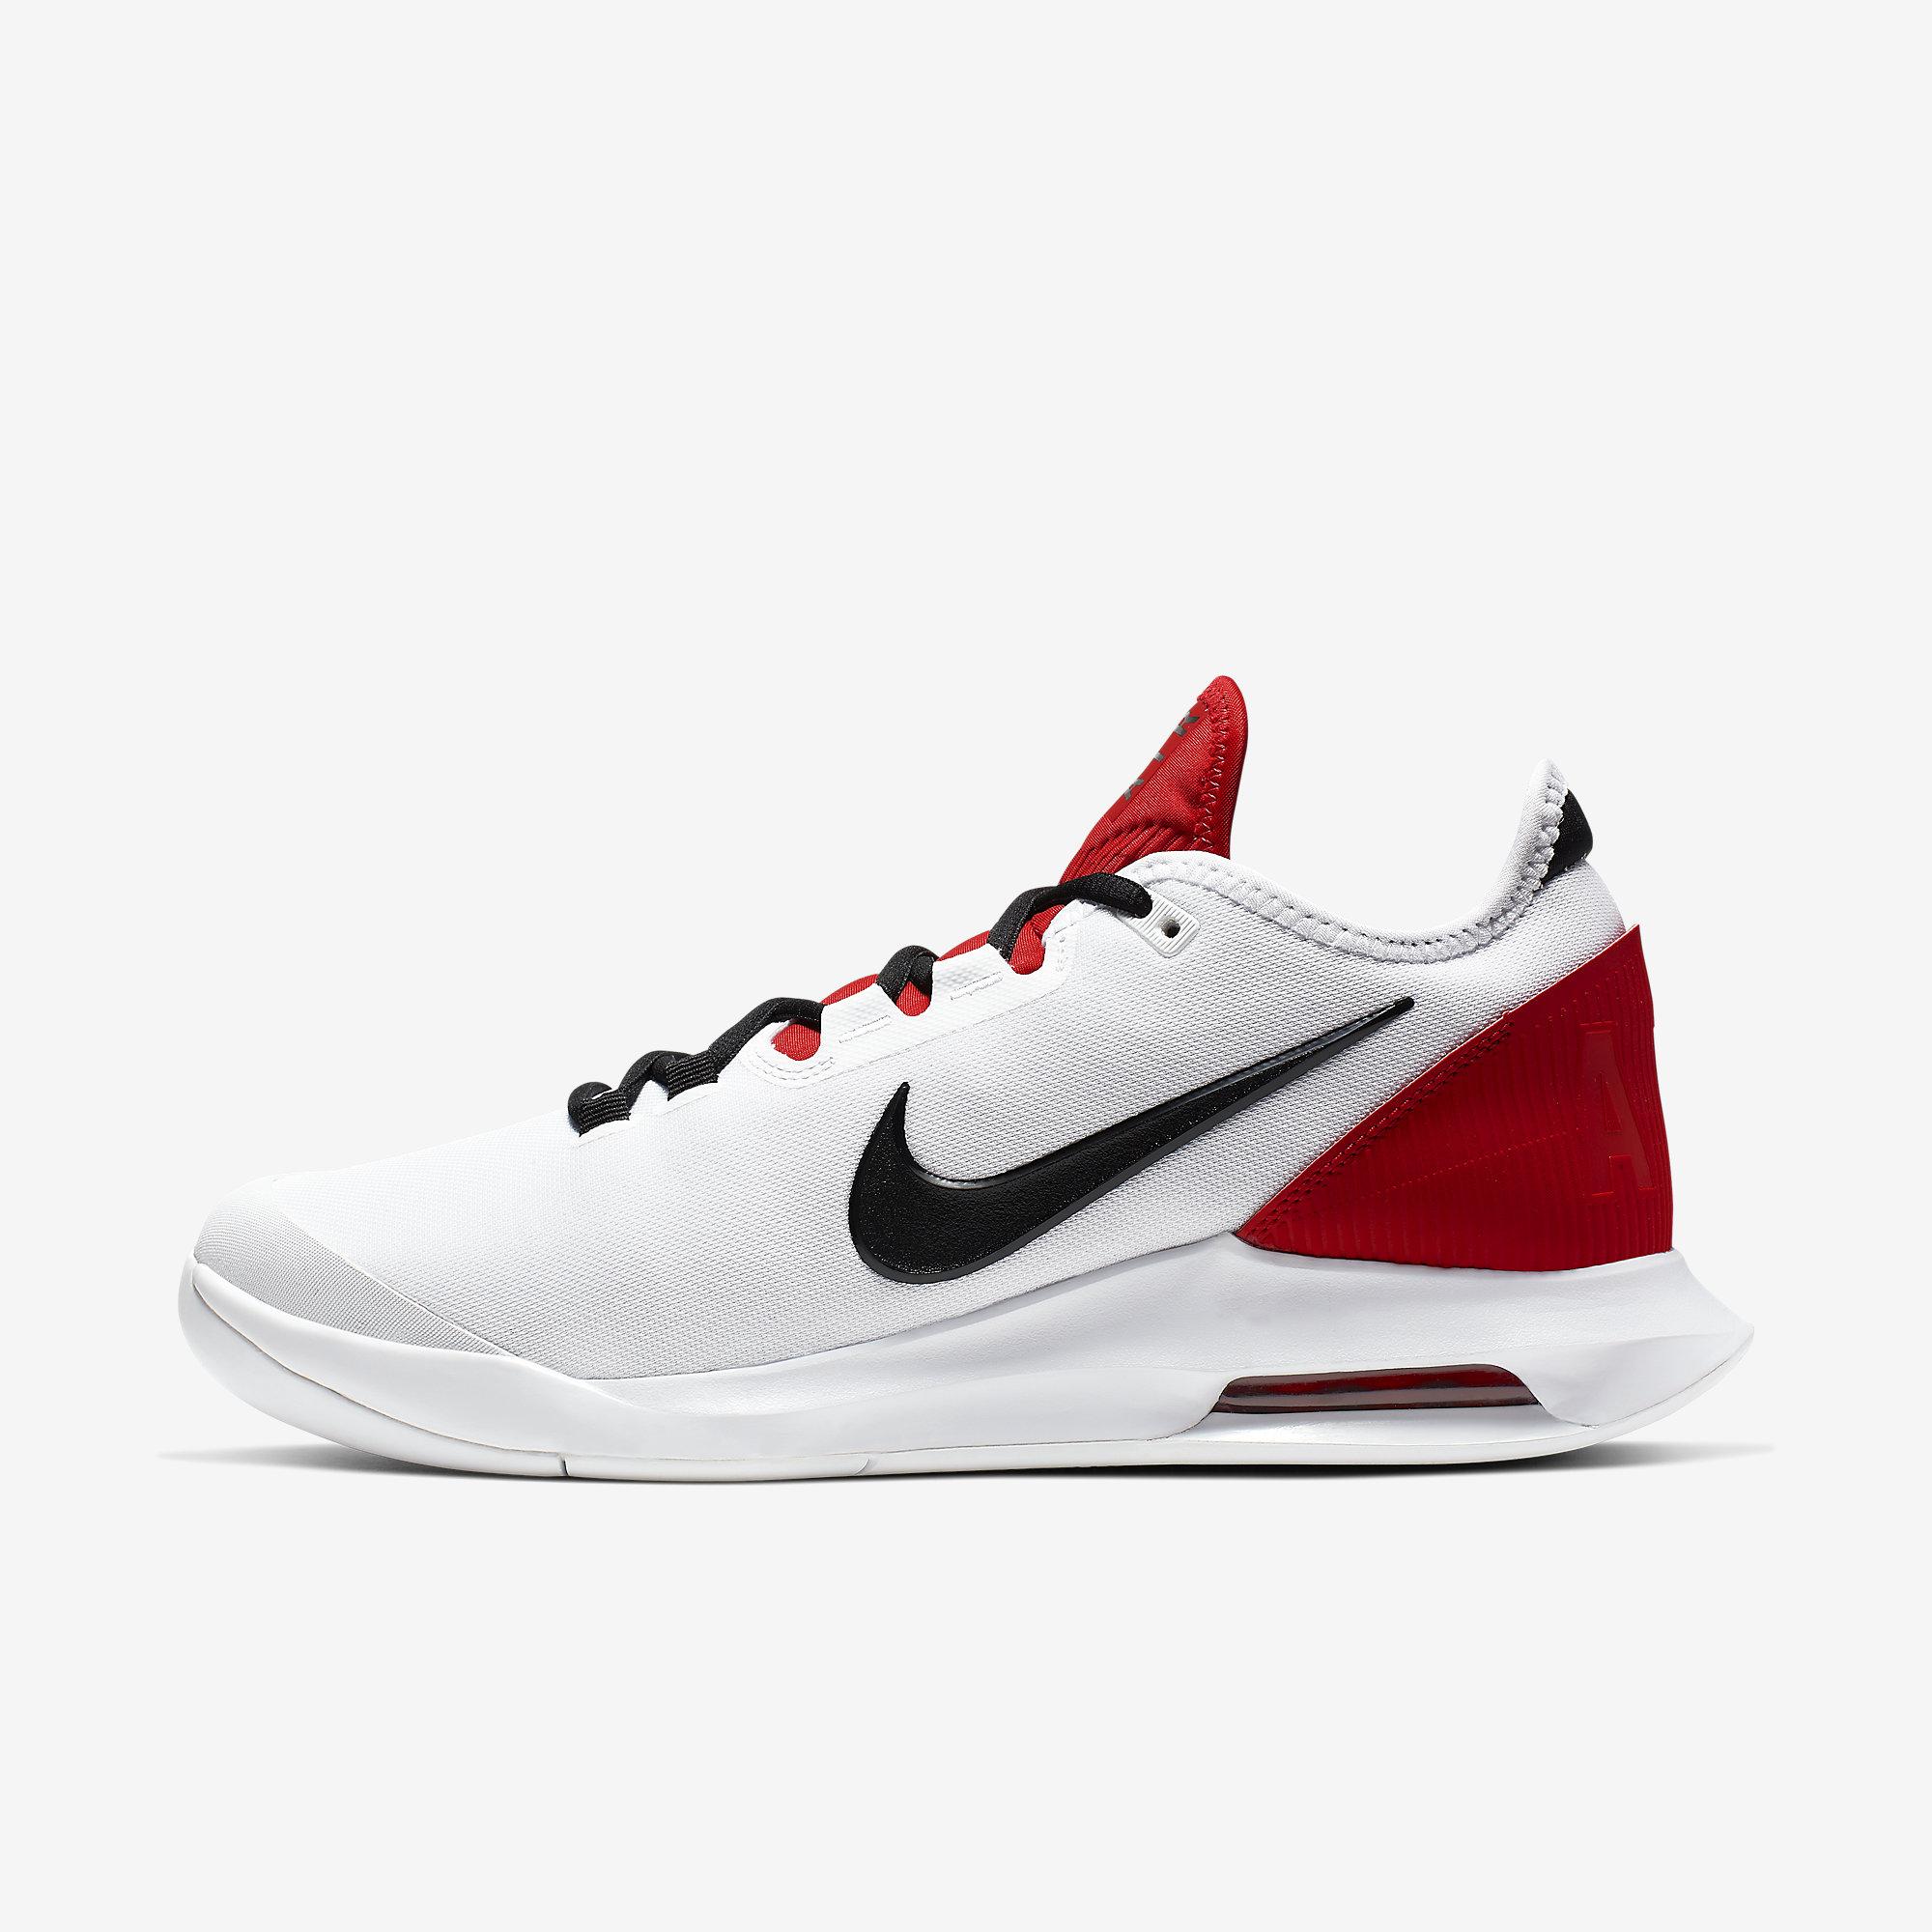 imagen conductor Panadería Nike Mens Air Max Wildcard Tennis Shoes - White/Black/University Red -  Tennisnuts.com